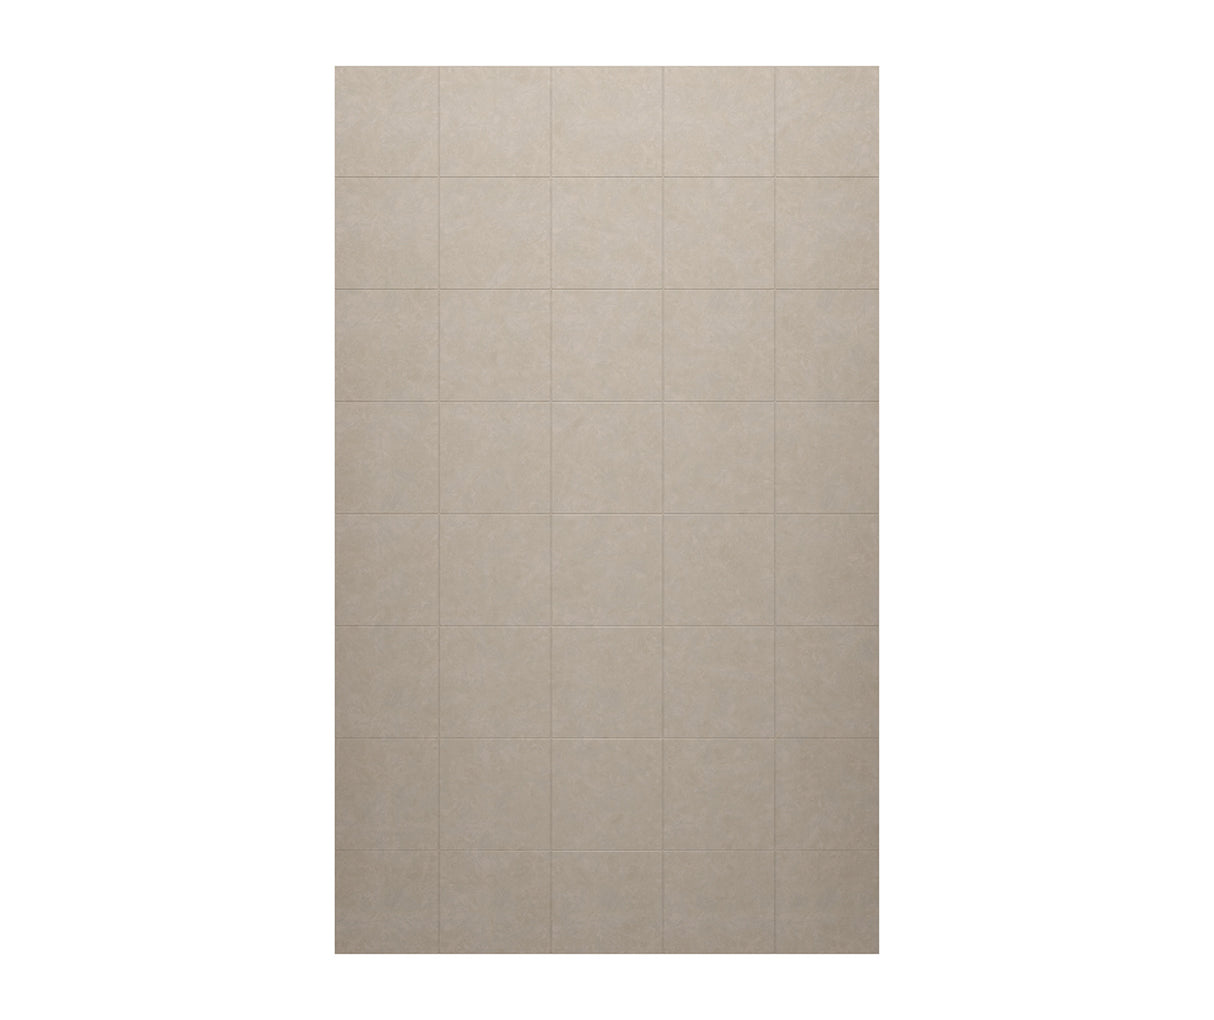 Swanstone SSSQ-3696-1 36 x 96 Swanstone Square Tile Glue up Bath Single Wall Panel in Limestone SSSQ369601.218